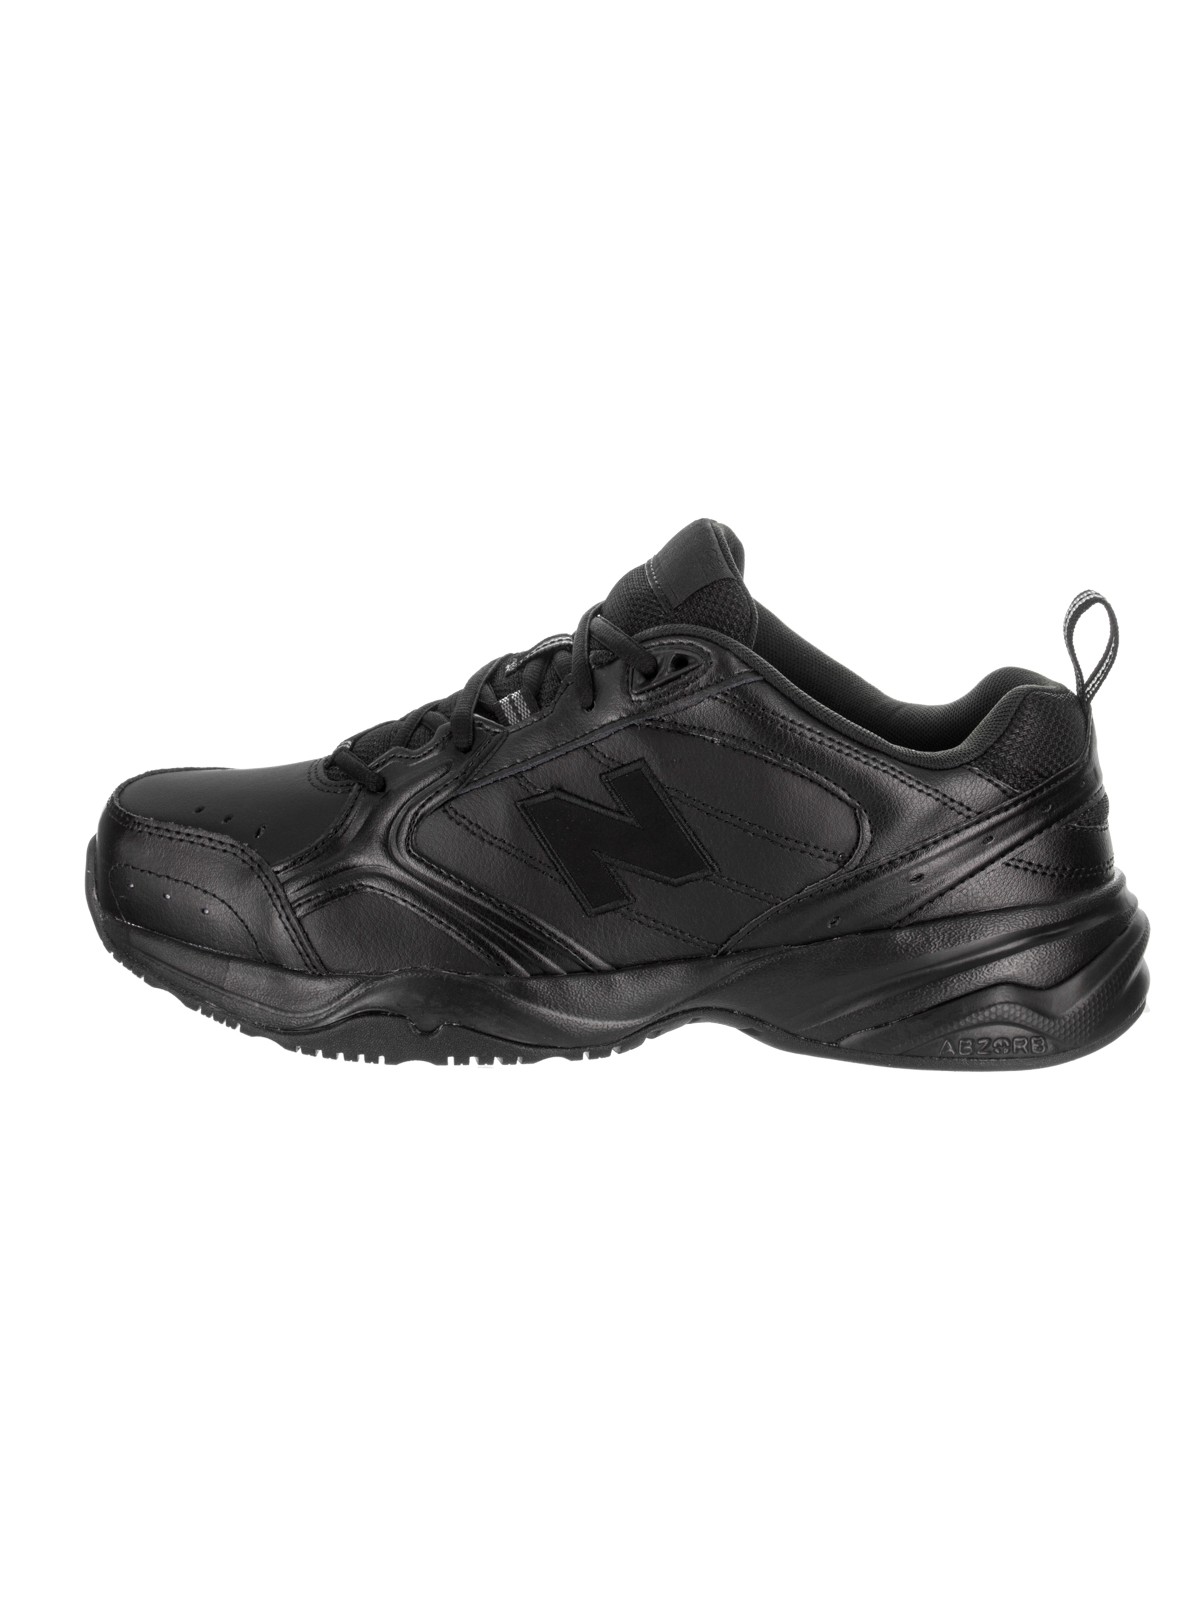 new balance men's mx624v2 casual comfort training shoe, black, 10.5 4e us - image 3 of 5